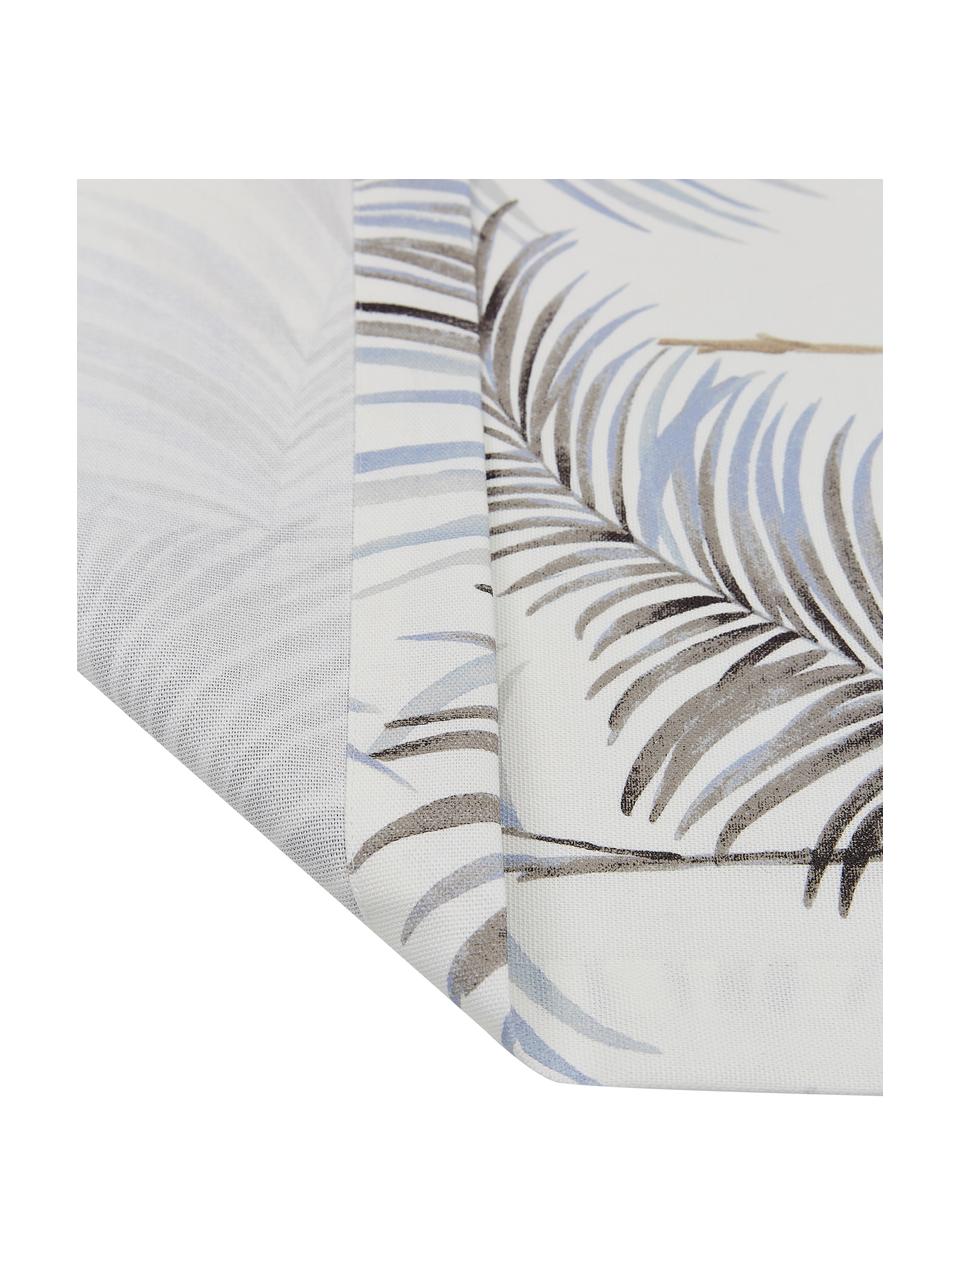 Chemin de table motif palmier Sahara, 100 % coton, Bleu, larg. 80 x long. 80 cm